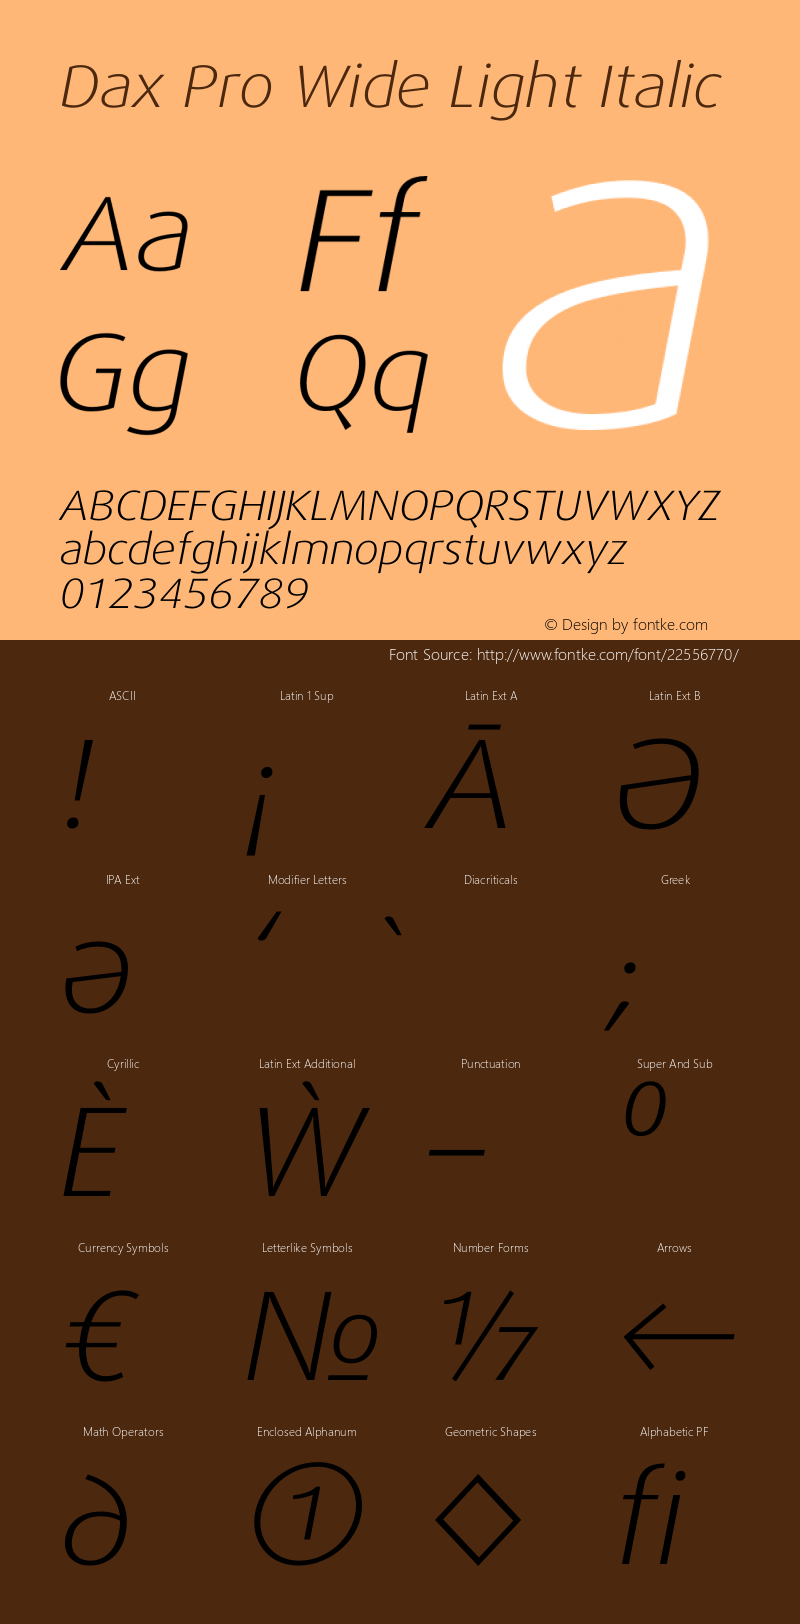 Dax Pro Wide Light Italic Version 7.504 Font Sample